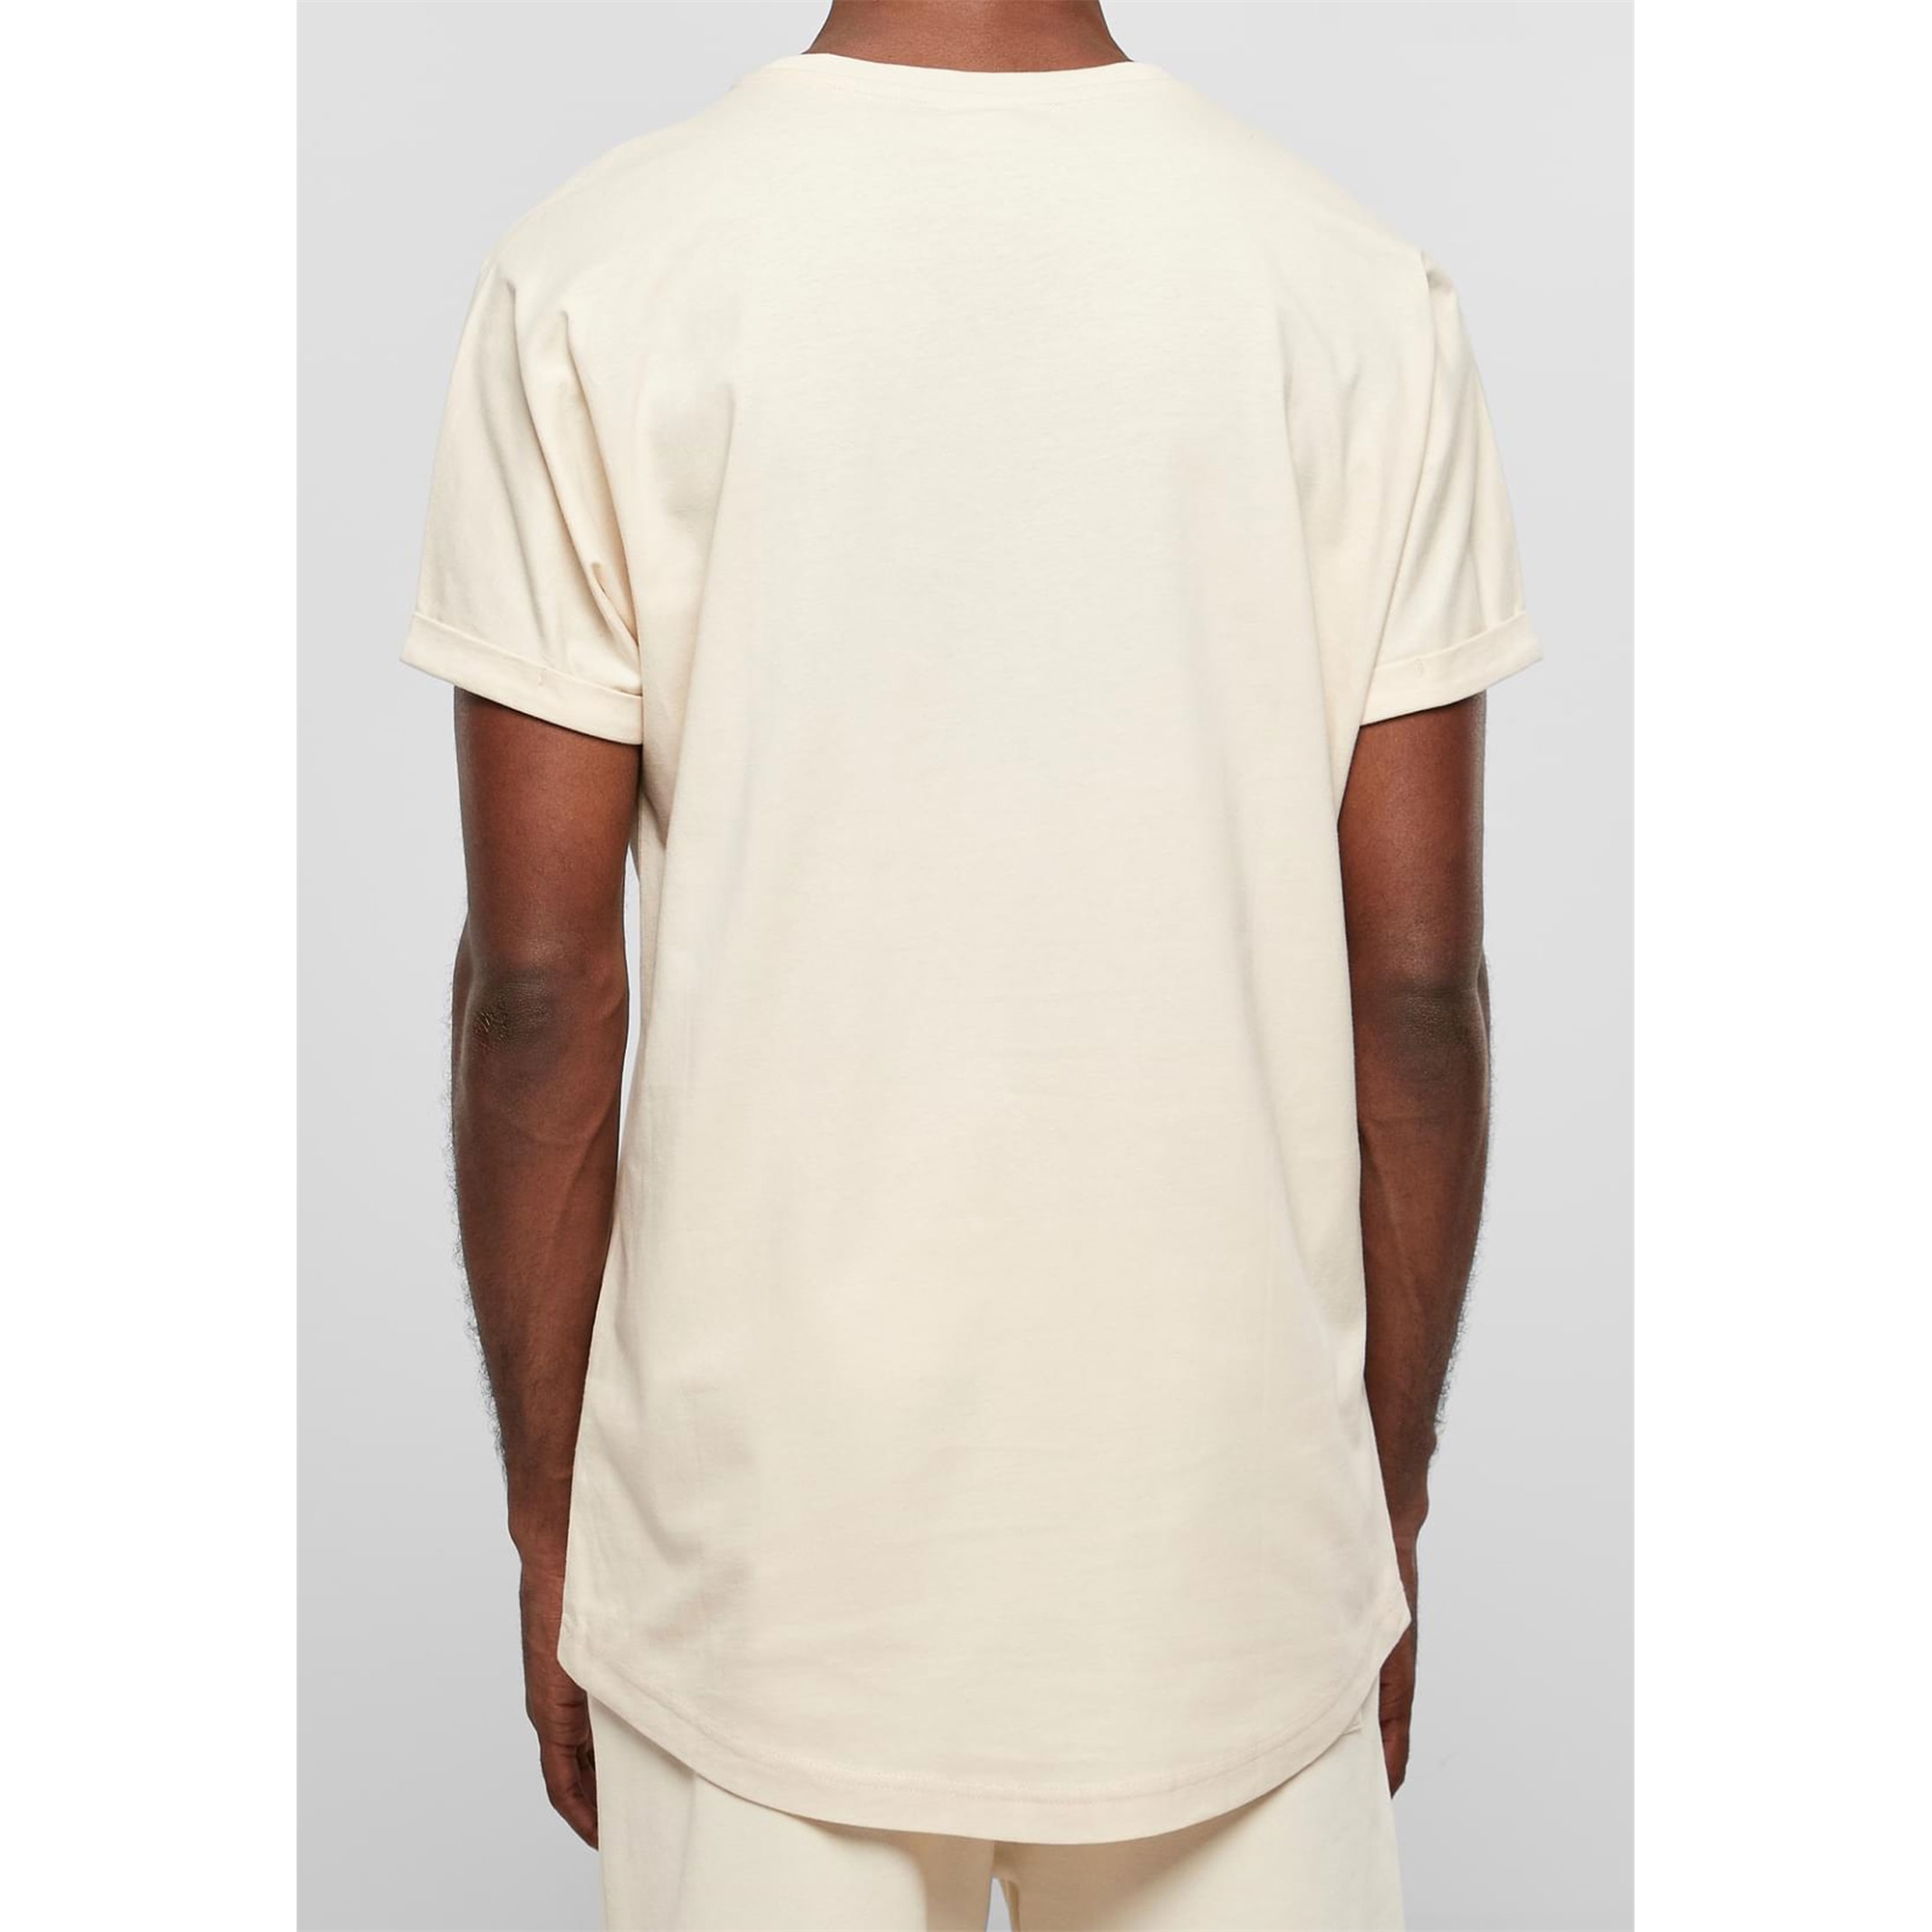 Shaped Classics | lang oversize Herren eBay extra Tee T-Shirt Long Turnup Urban Shirt